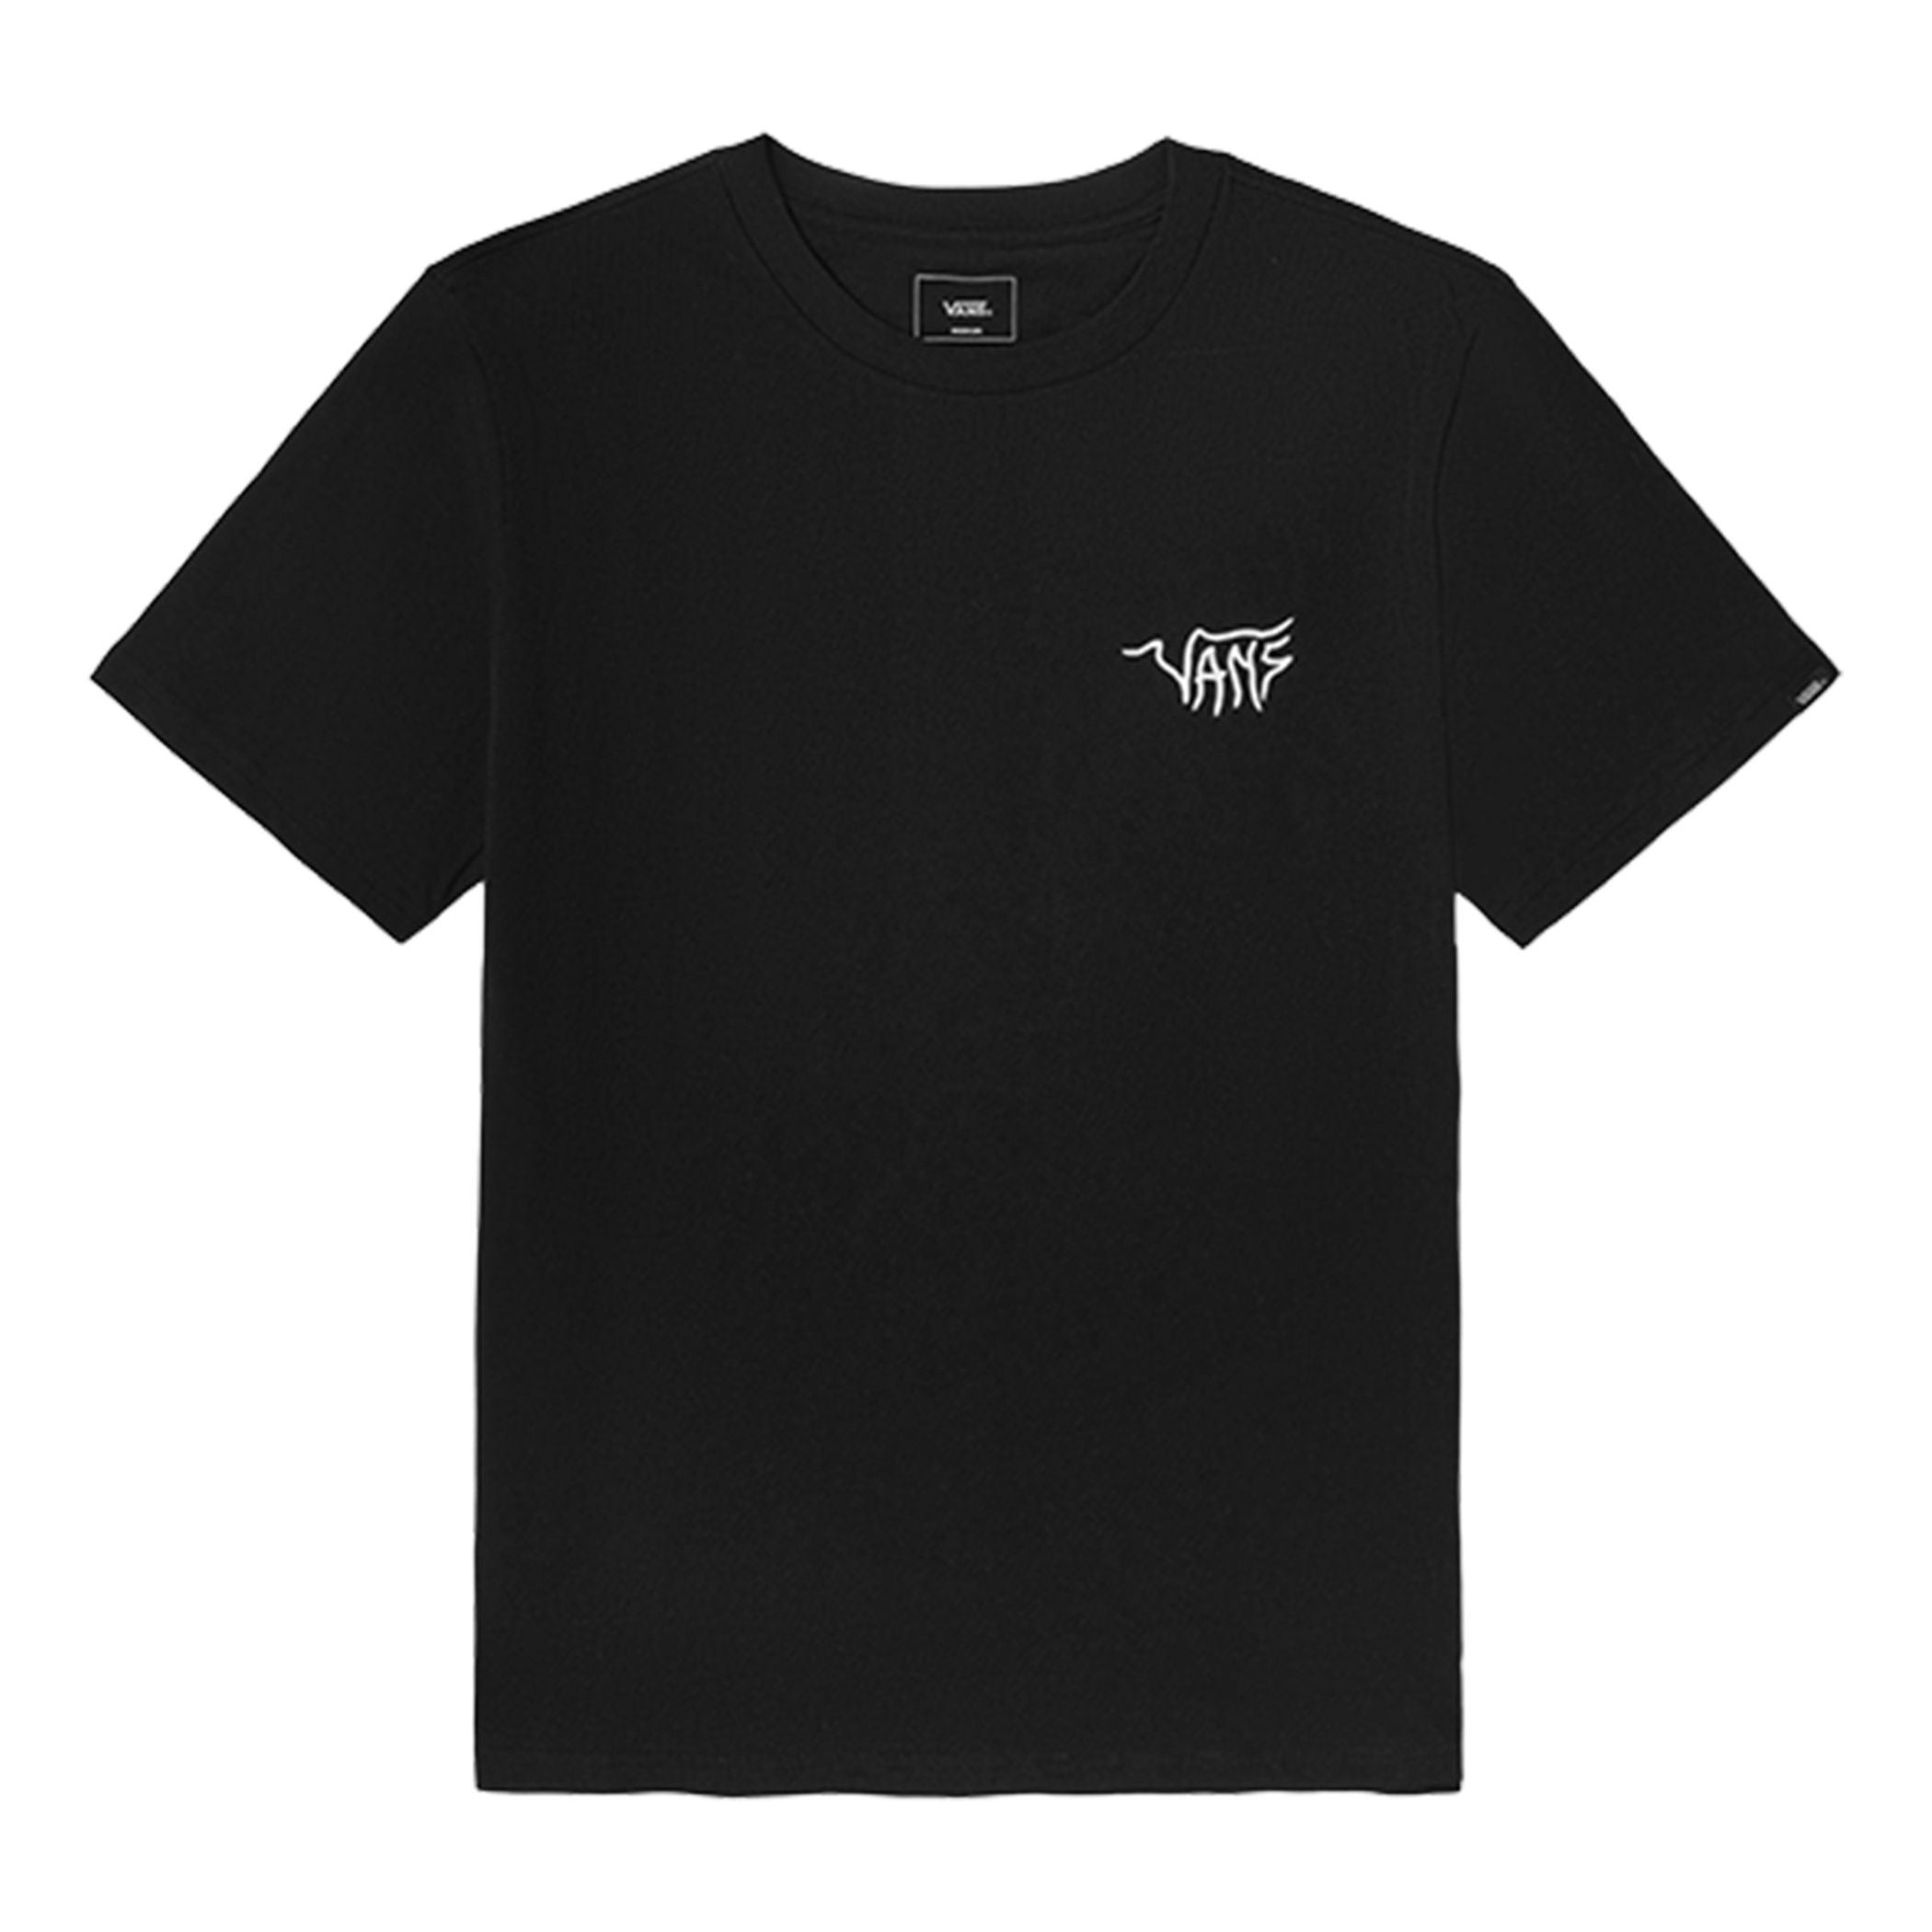 Vans Dinosaur Graphic T-shirt 'Black' VN0A7TPMBLK - 1